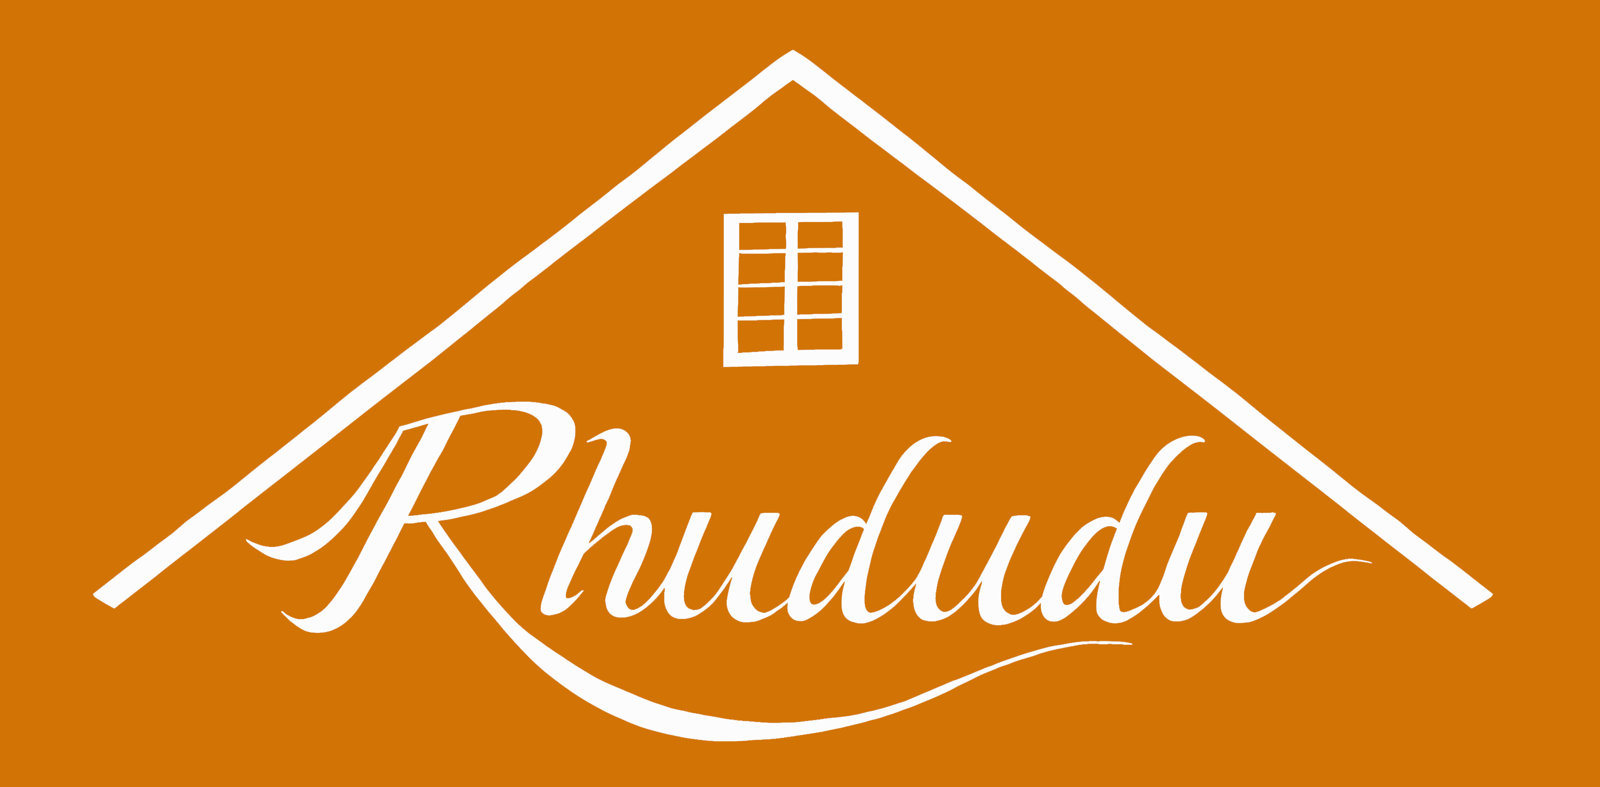 RHUDUDU